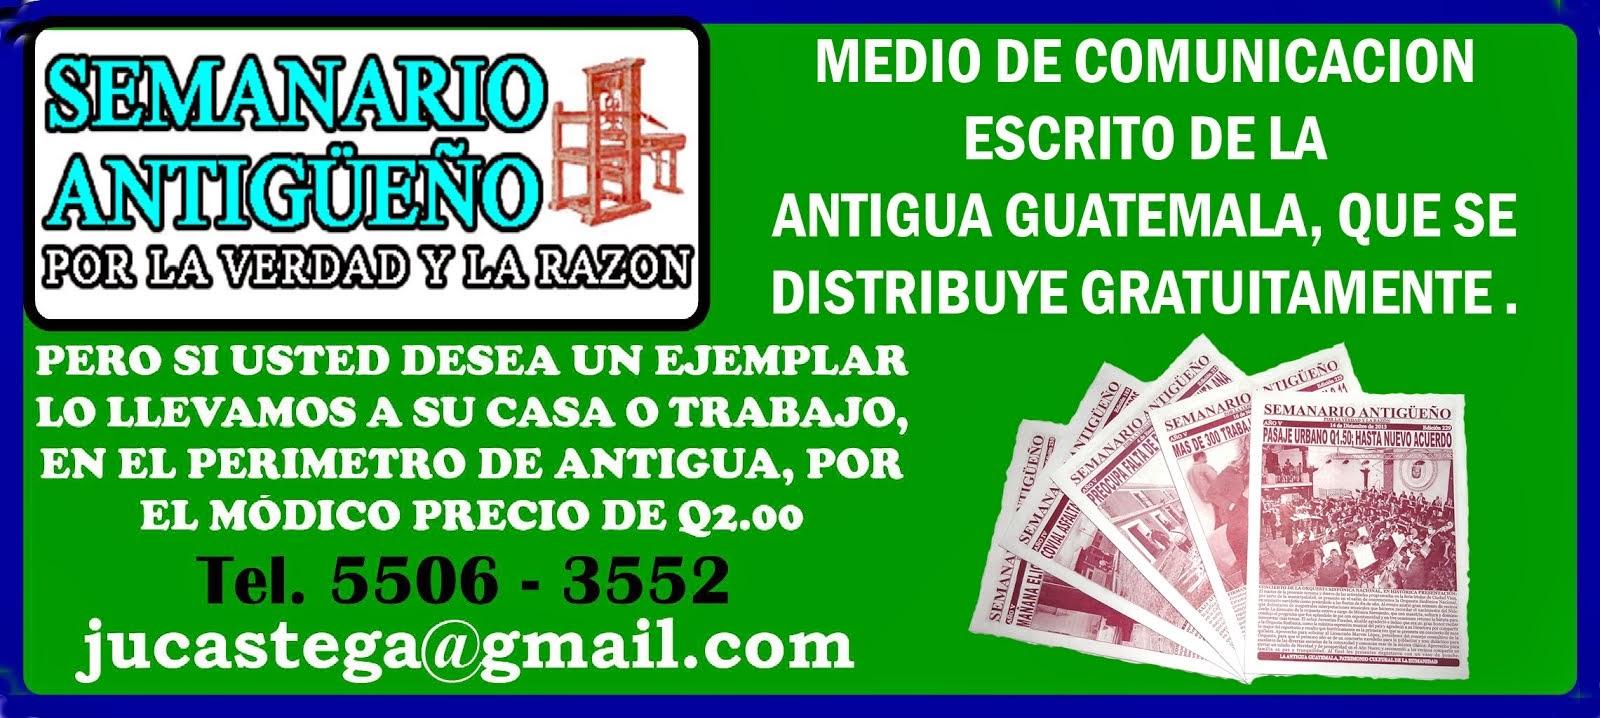 MEDIO DE COMUNICACION DE ANTIGUA GUATE.